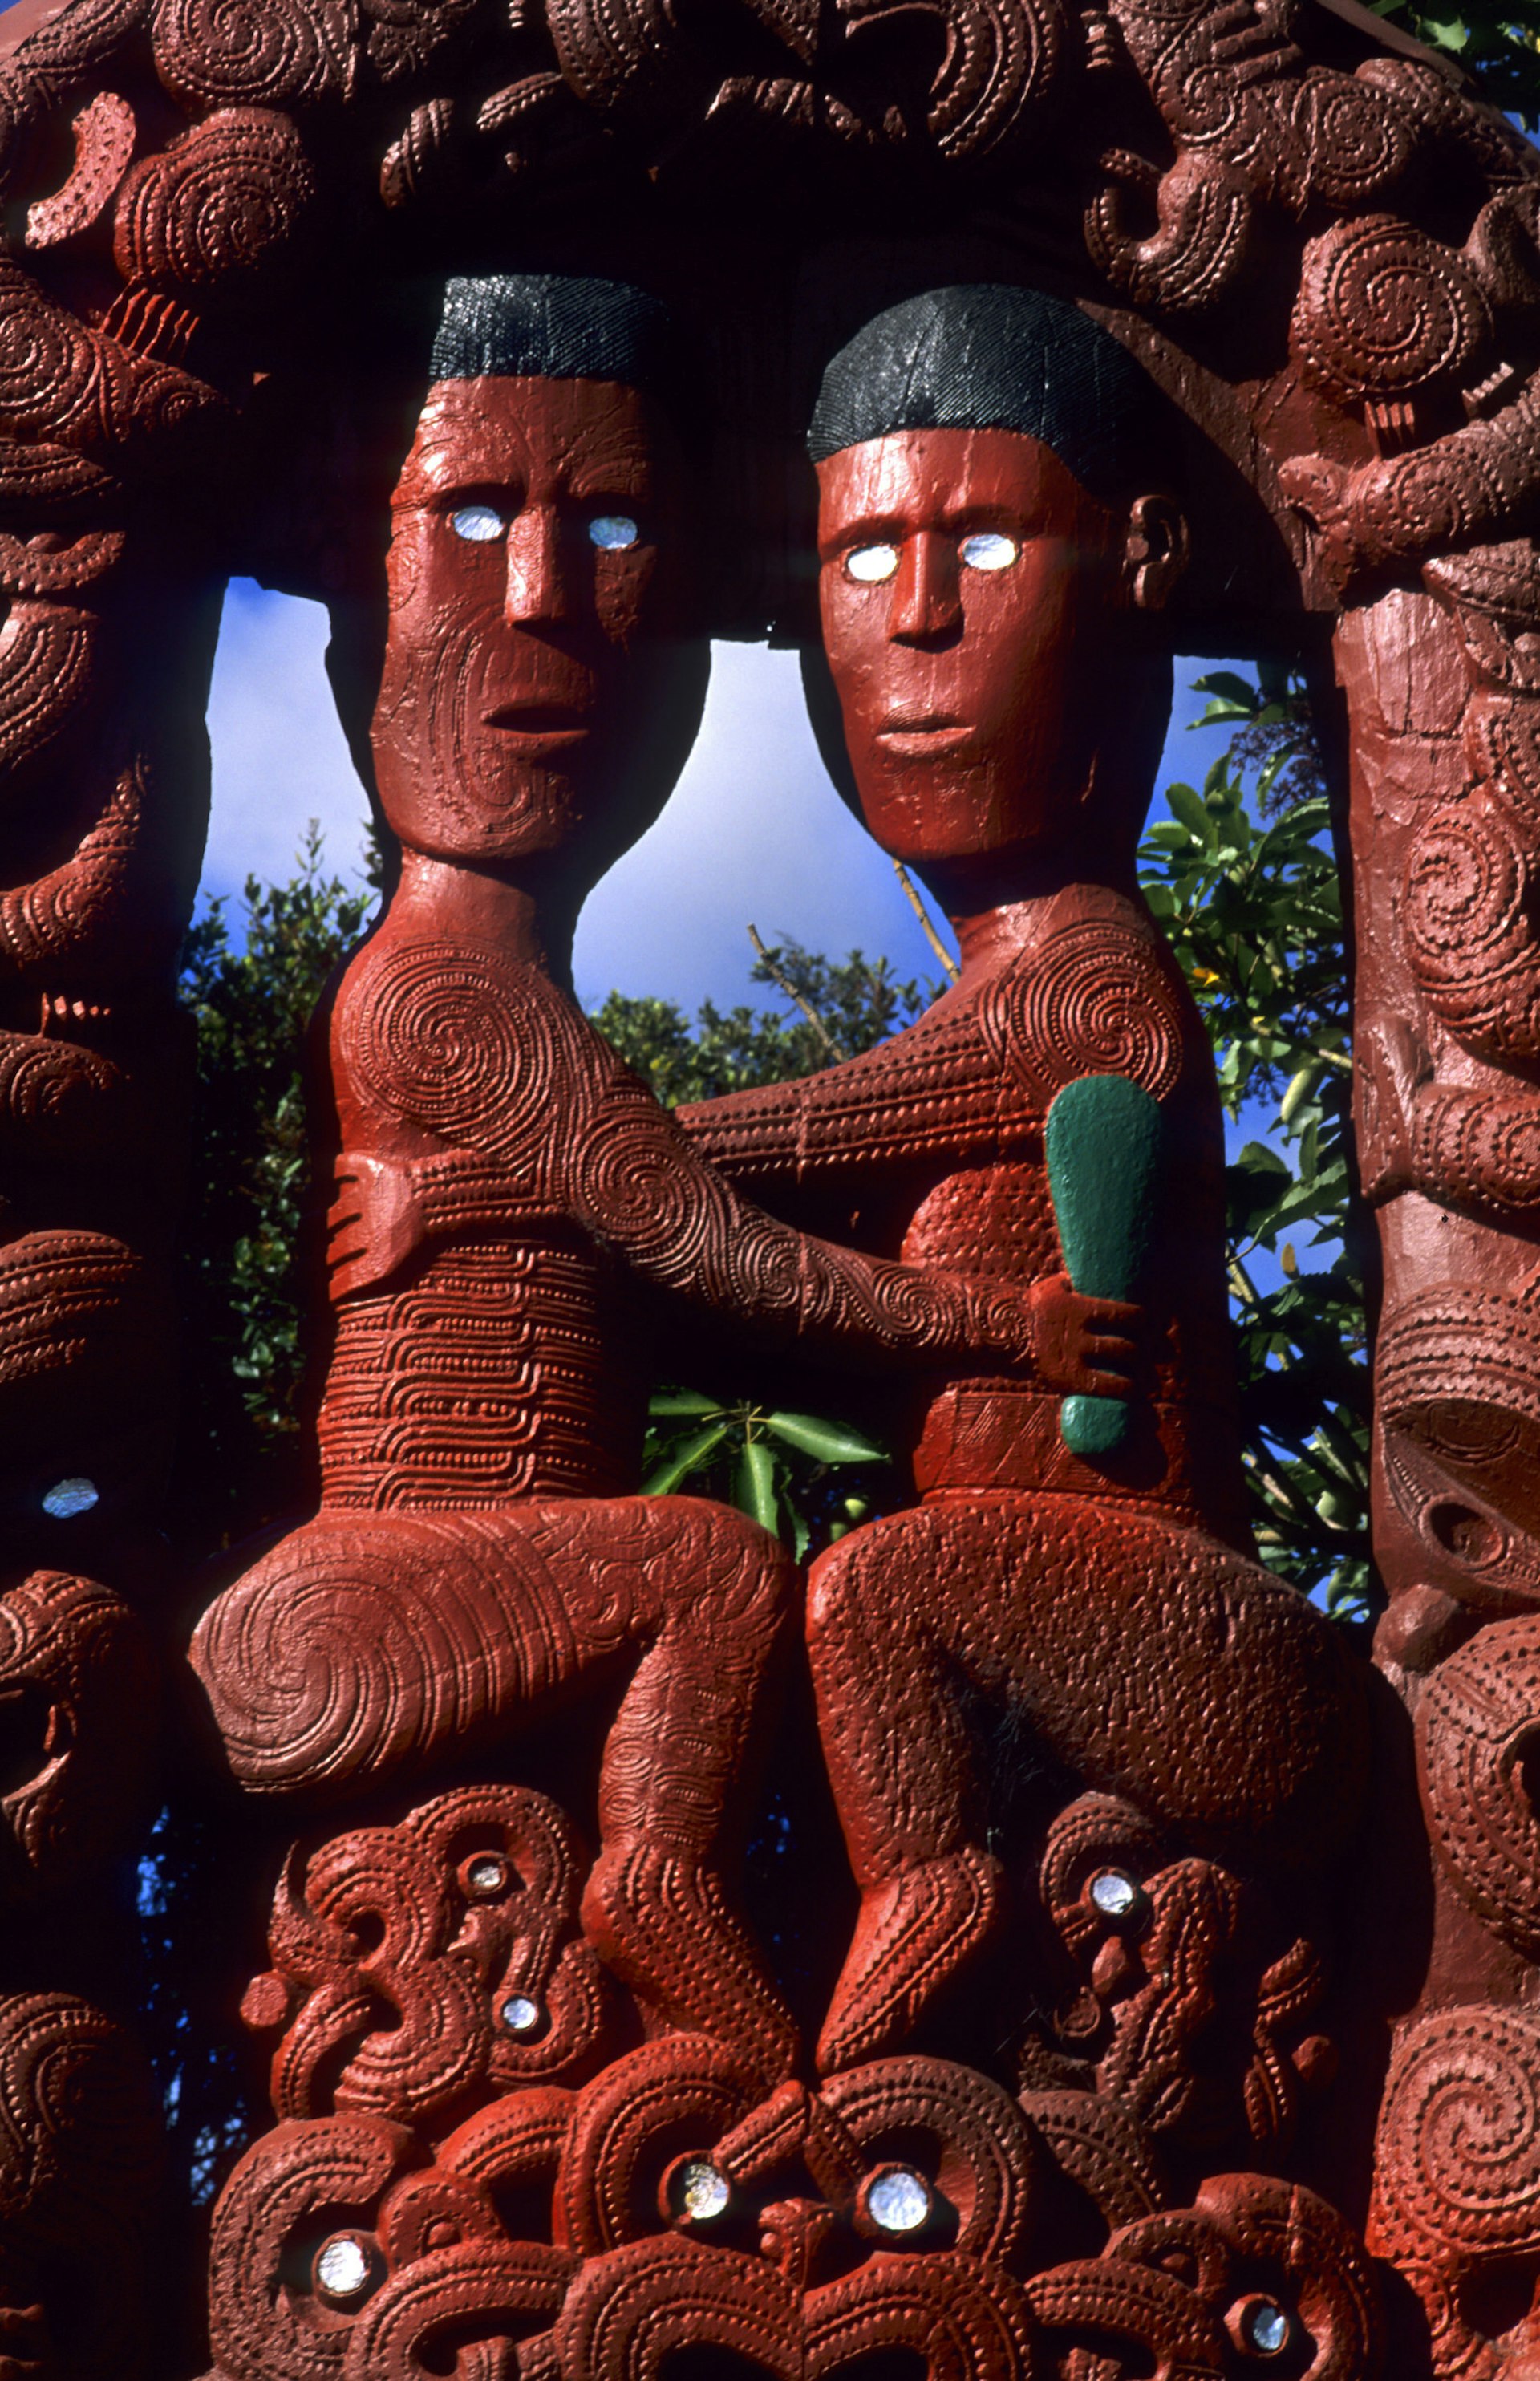 wedding anniversary trip ideas - A Maori wood carving in Rotorua, New Zealand.